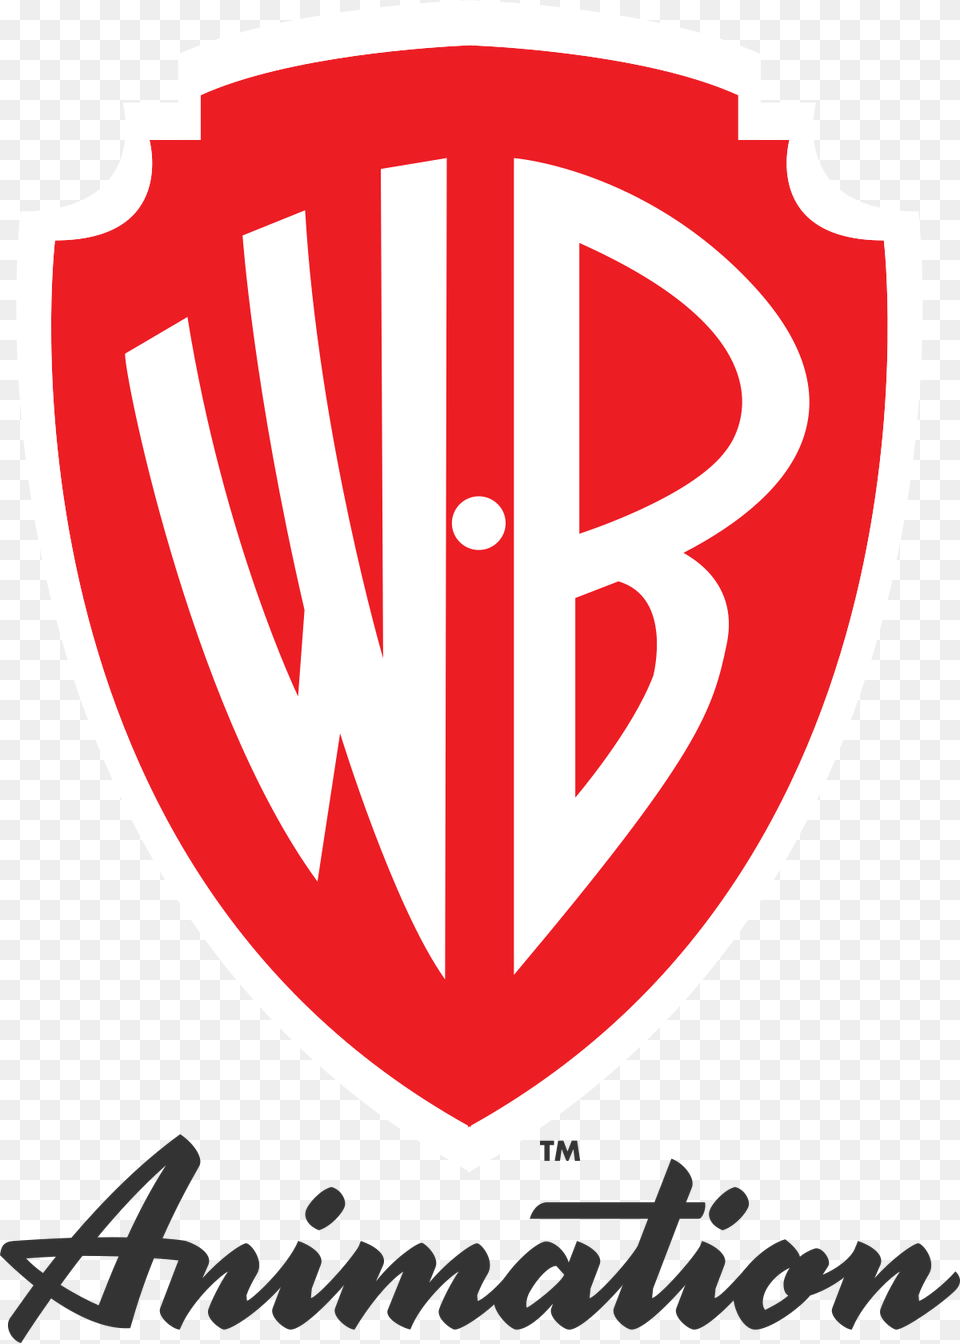 Warner Bros Animation Creator Tv Tropes Warner Bros Animation Logo 2020, Armor, Shield, Dynamite, Weapon Png Image